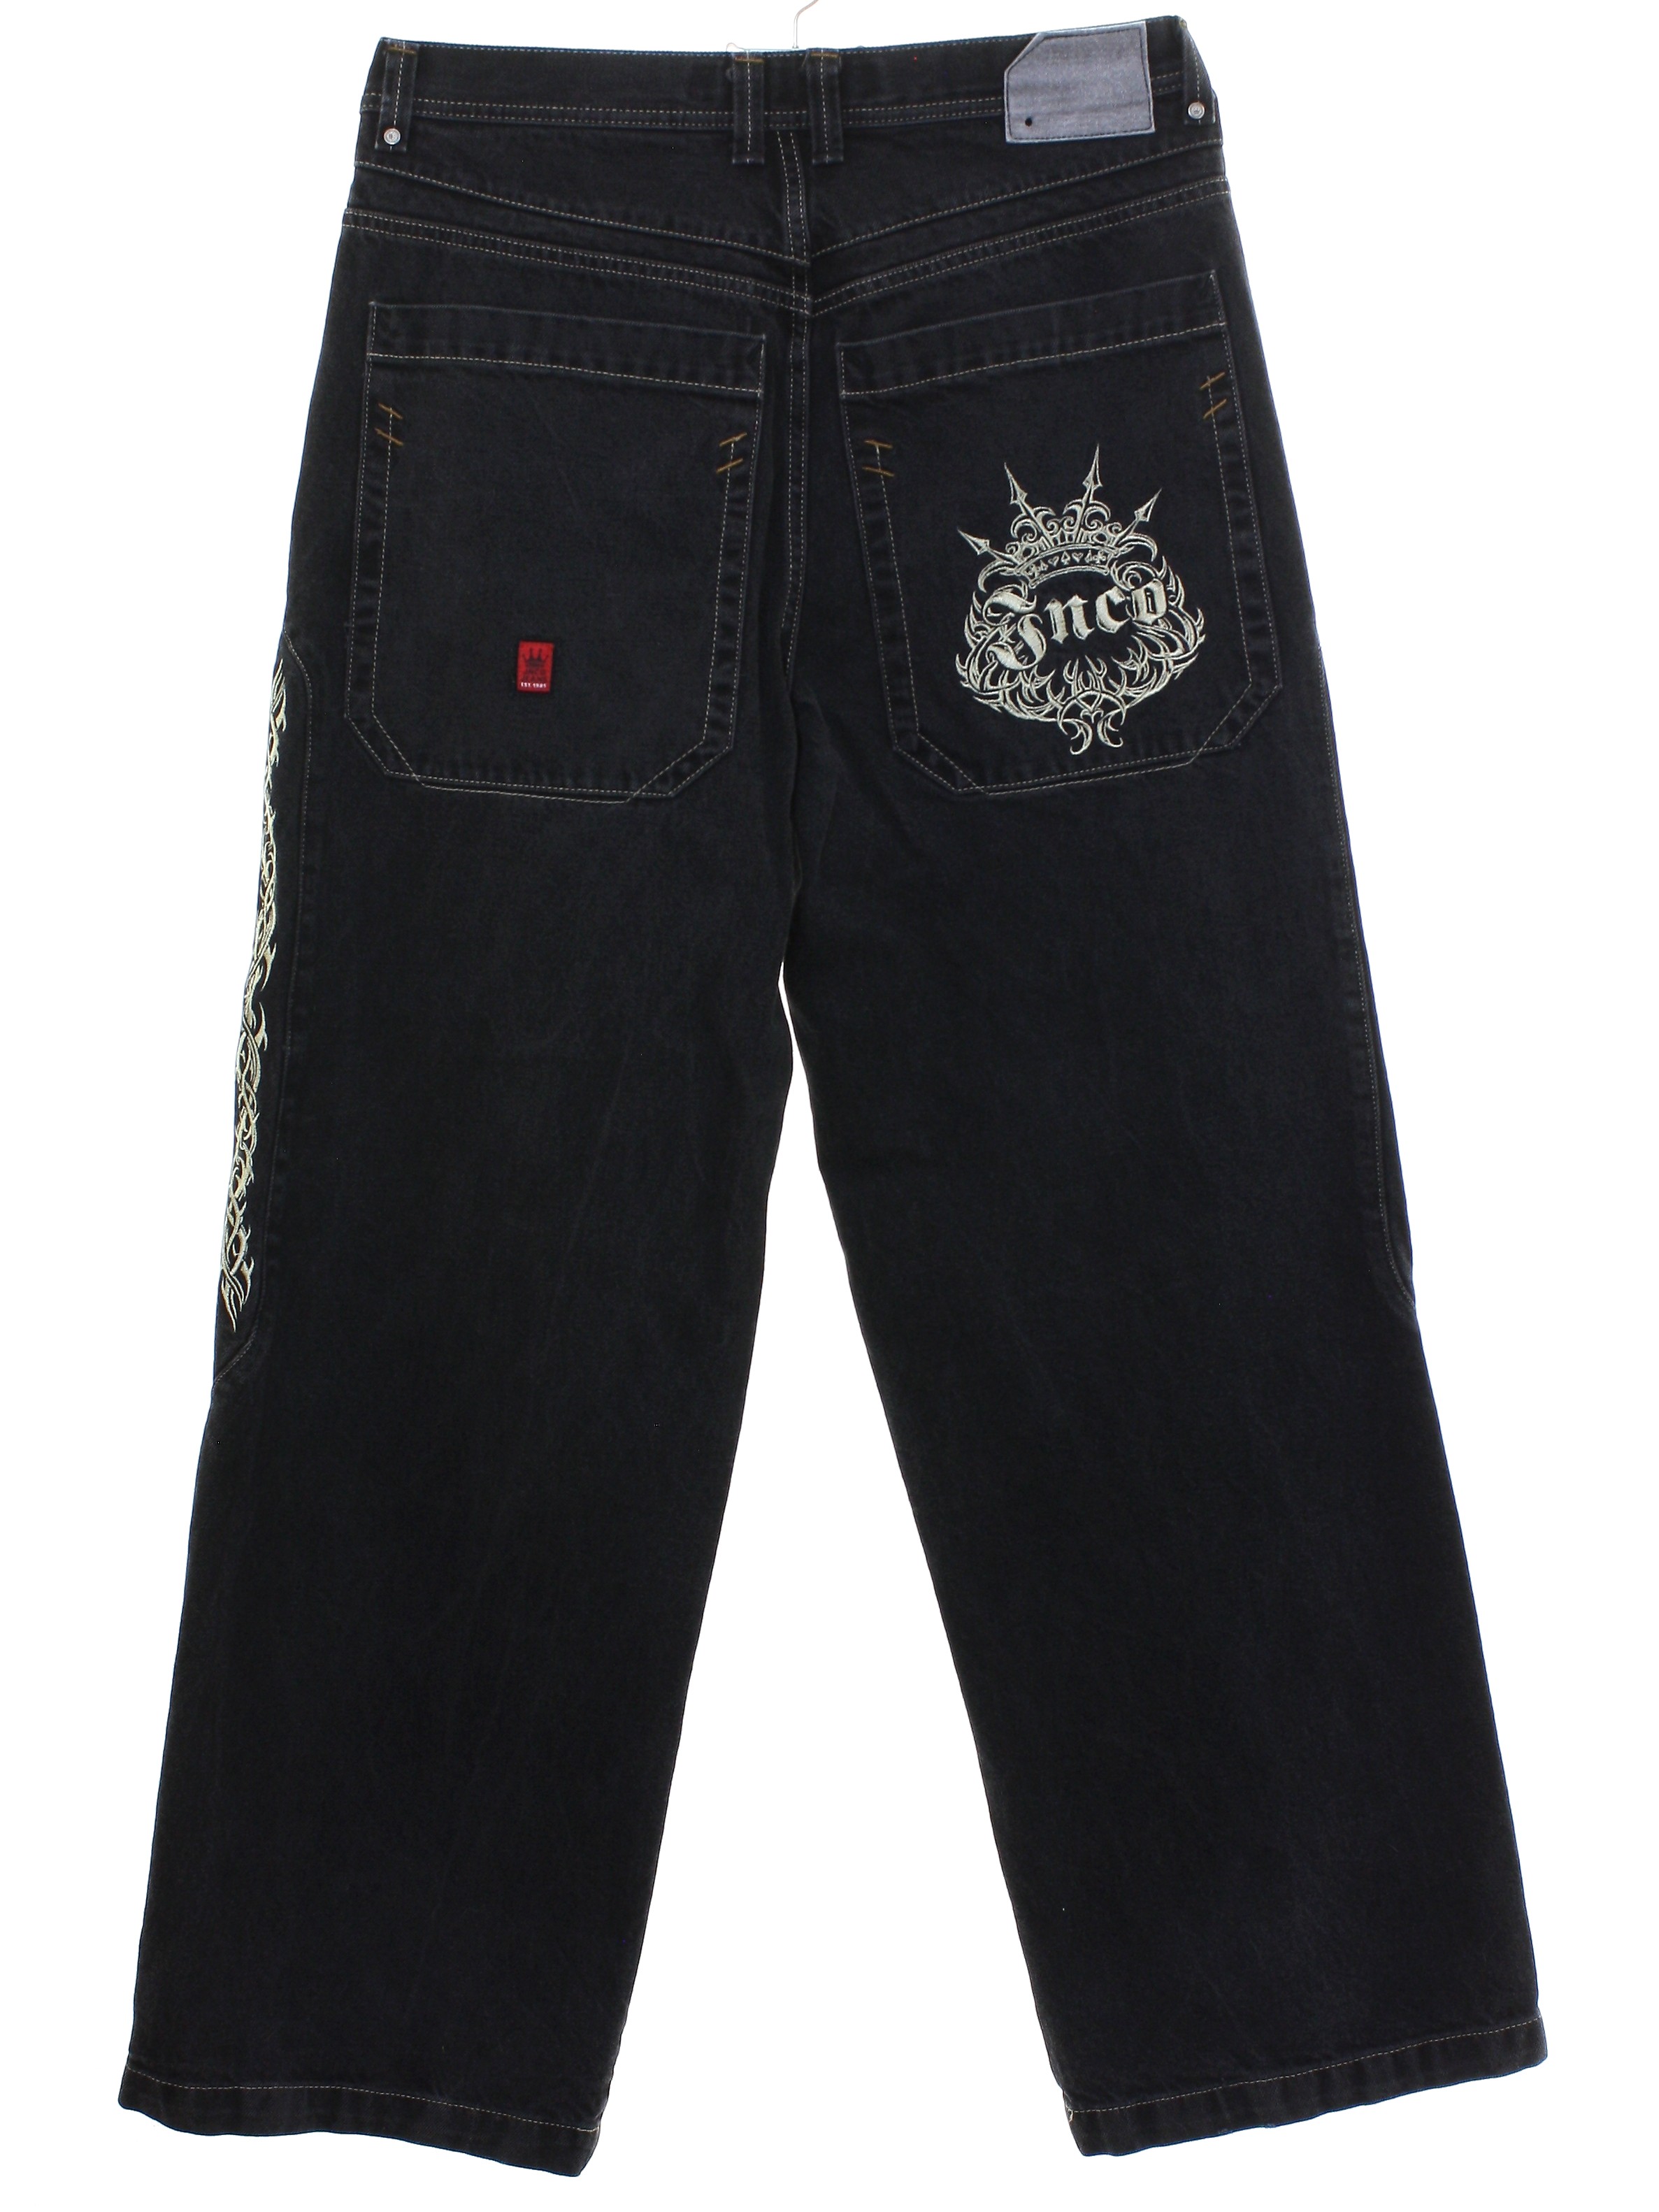 Retro Nineties Pants: 90s -Jnco Jeans- Mens slightly faded black cotton ...